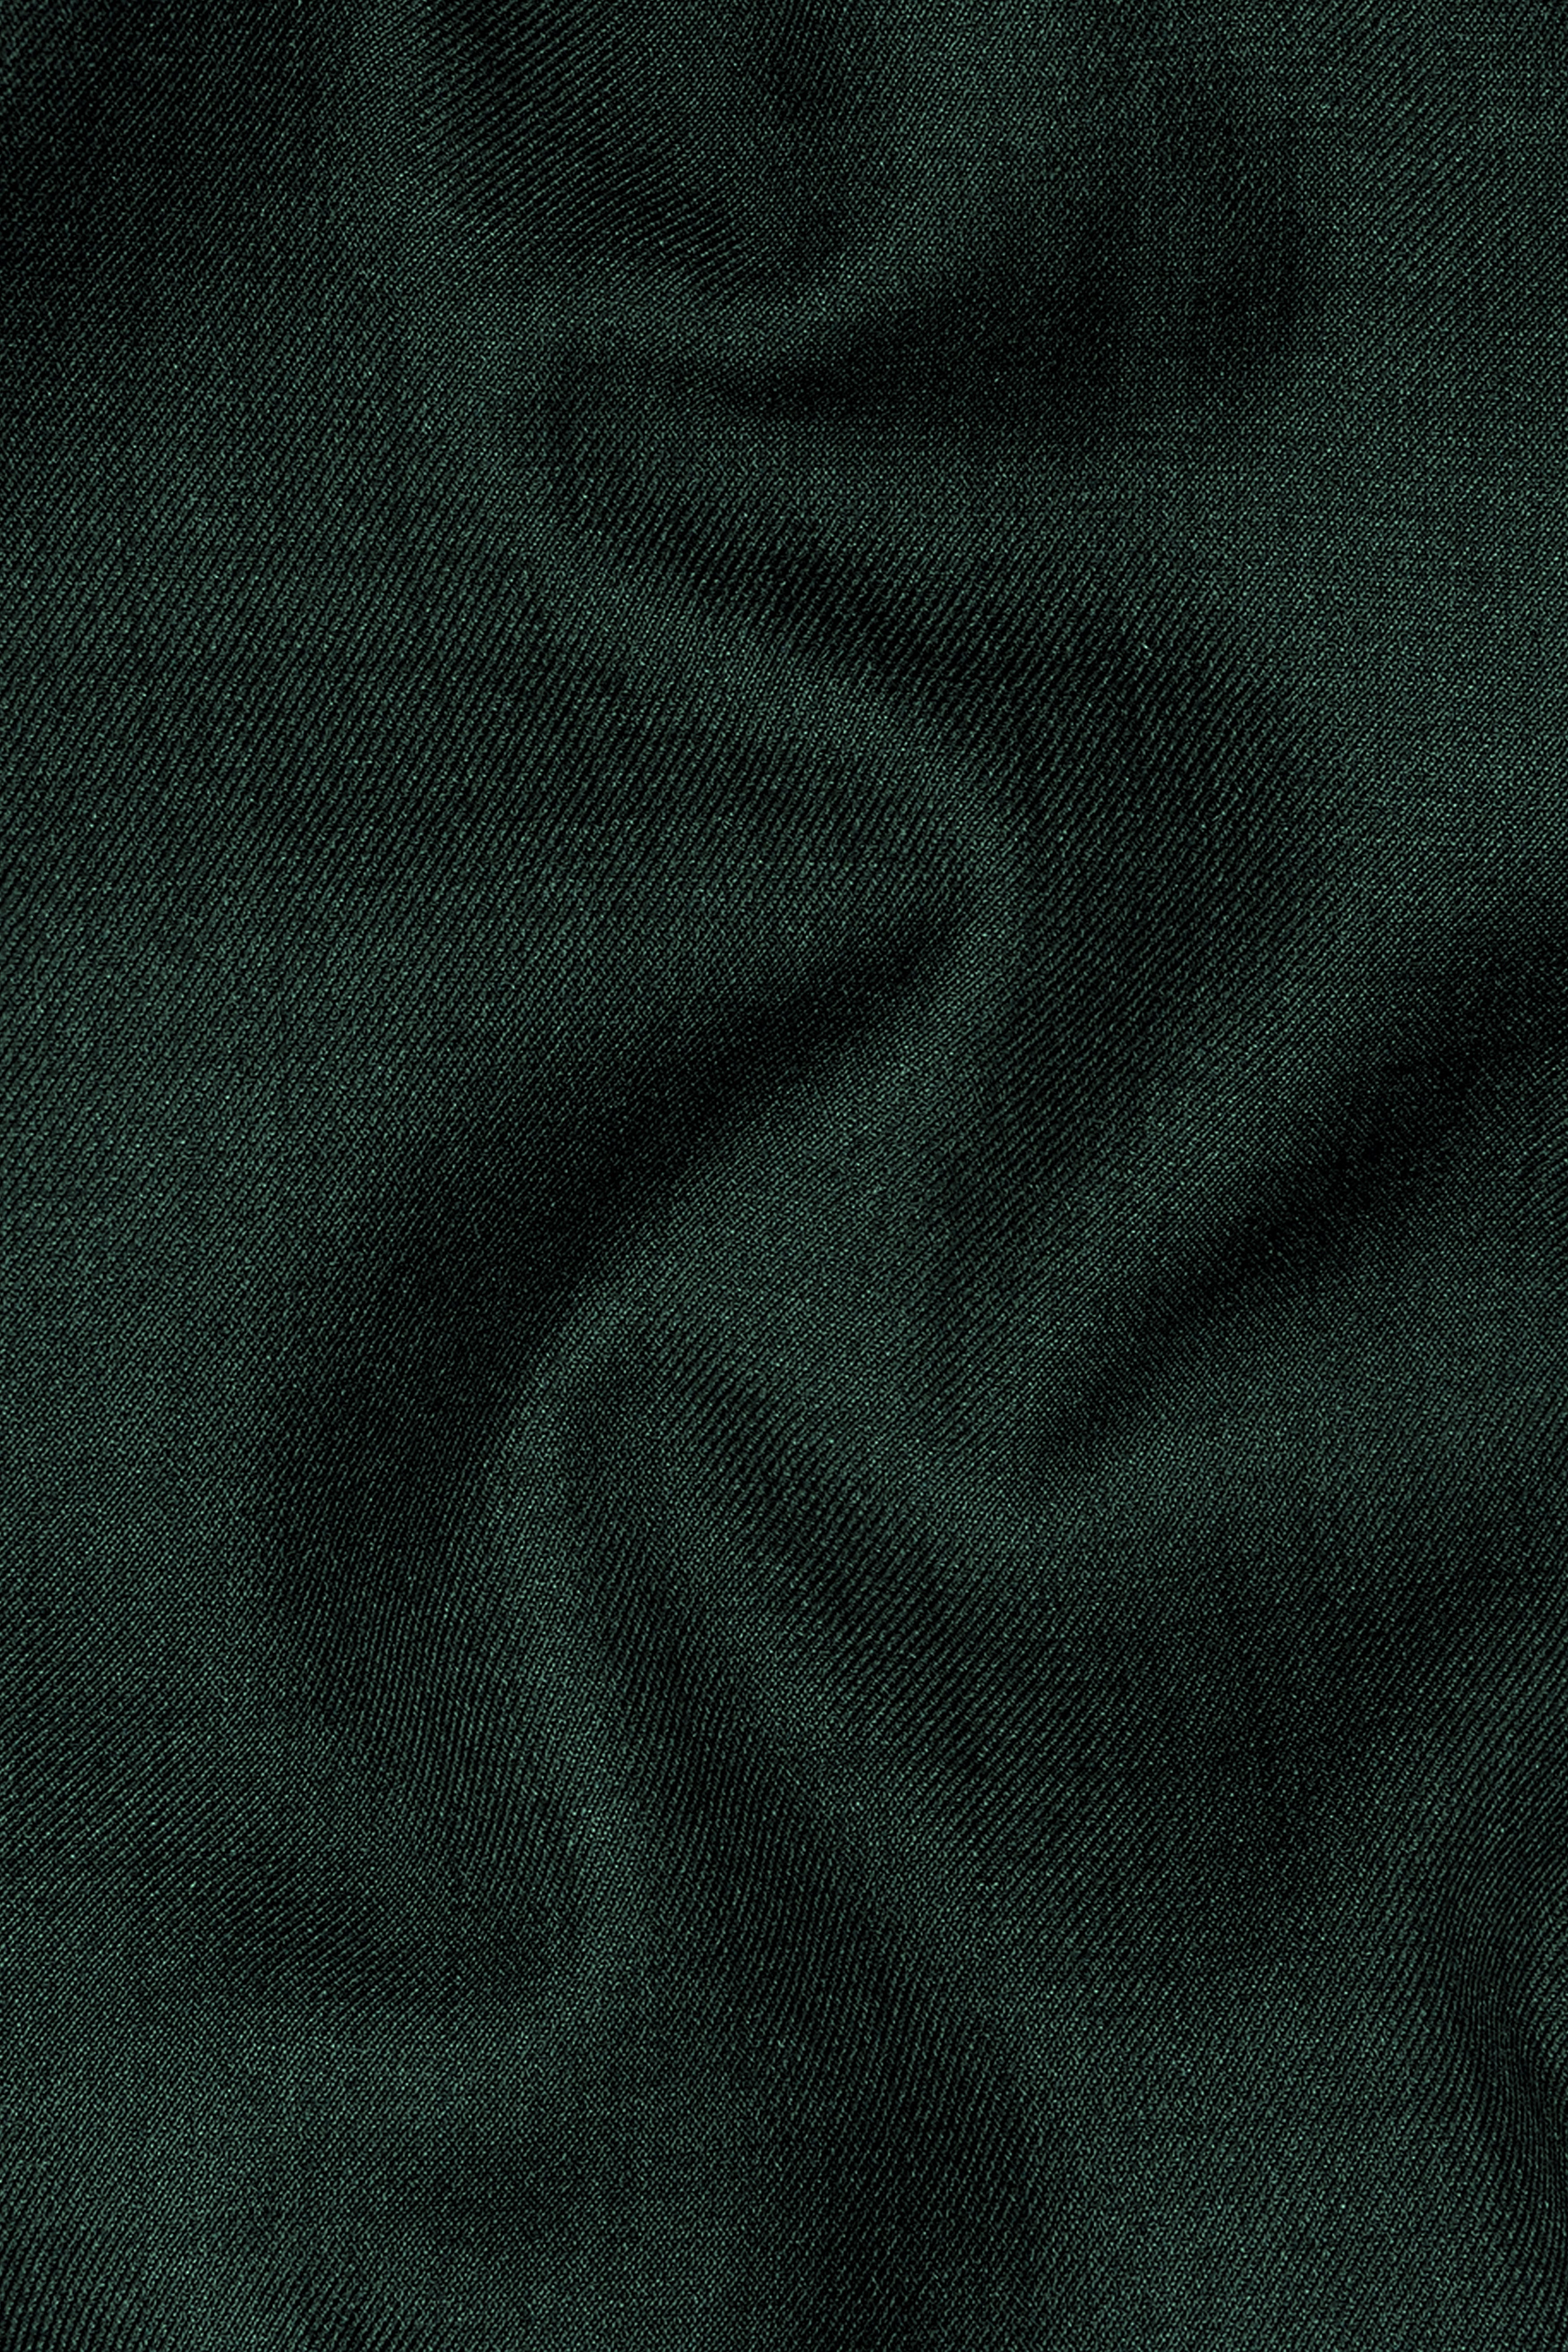 Gable Green Wool Rich Suit ST2901-SB-36, ST2901-SB-38, ST2901-SB-40, ST2901-SB-42, ST2901-SB-44, ST2901-SB-46, ST2901-SB-48, ST2901-SB-50, ST2901-SB-52, ST2901-SB-54, ST2901-SB-56, ST2901-SB-58, ST2901-SB-60